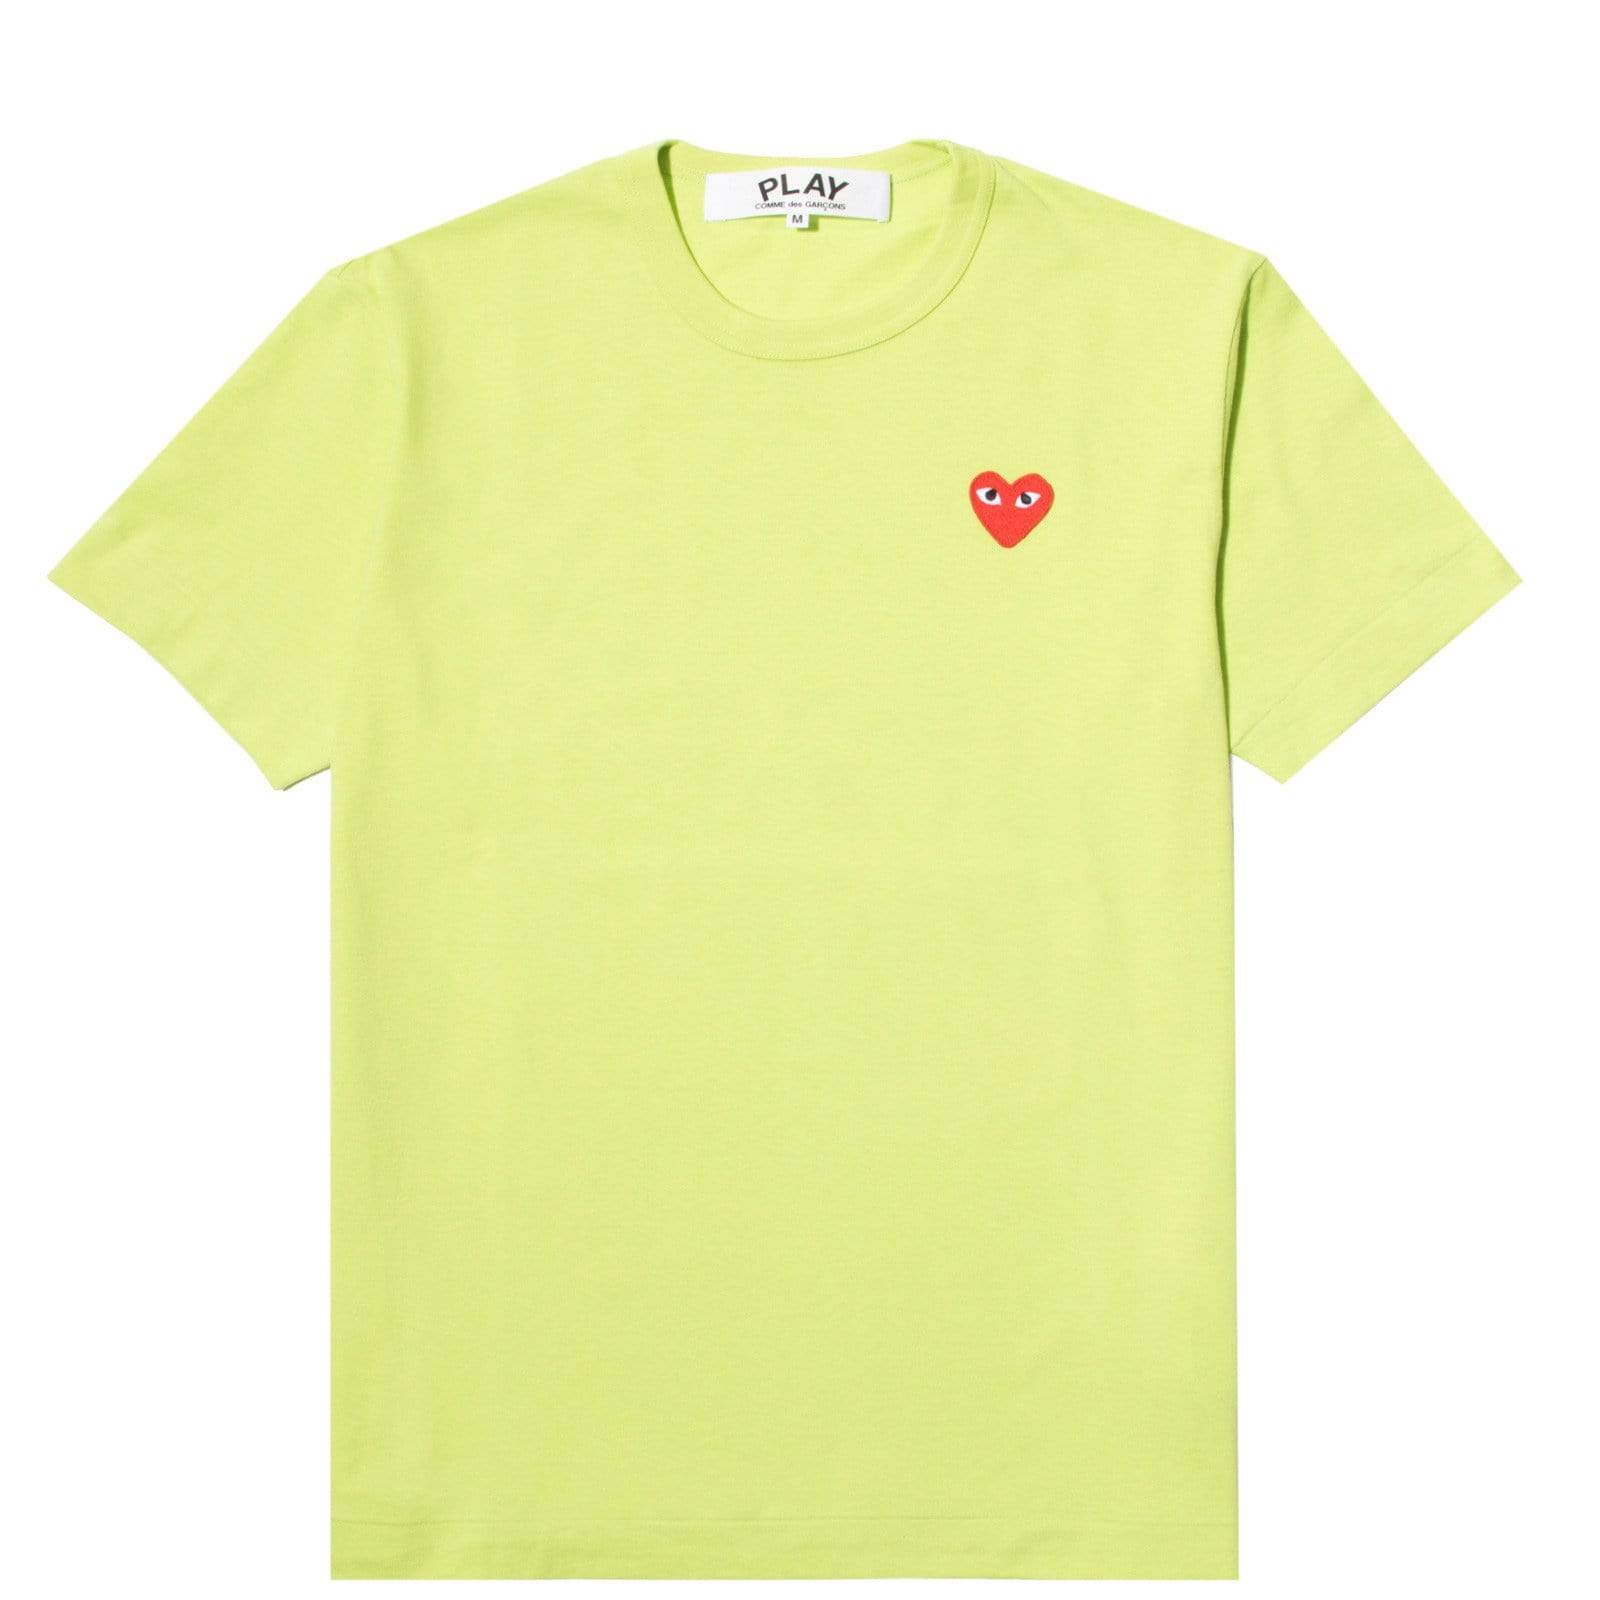 servidor Propio grua Shirt Green/Red Heart – GmarShops Store - Play T - adidas originals Men s  clothing Pants